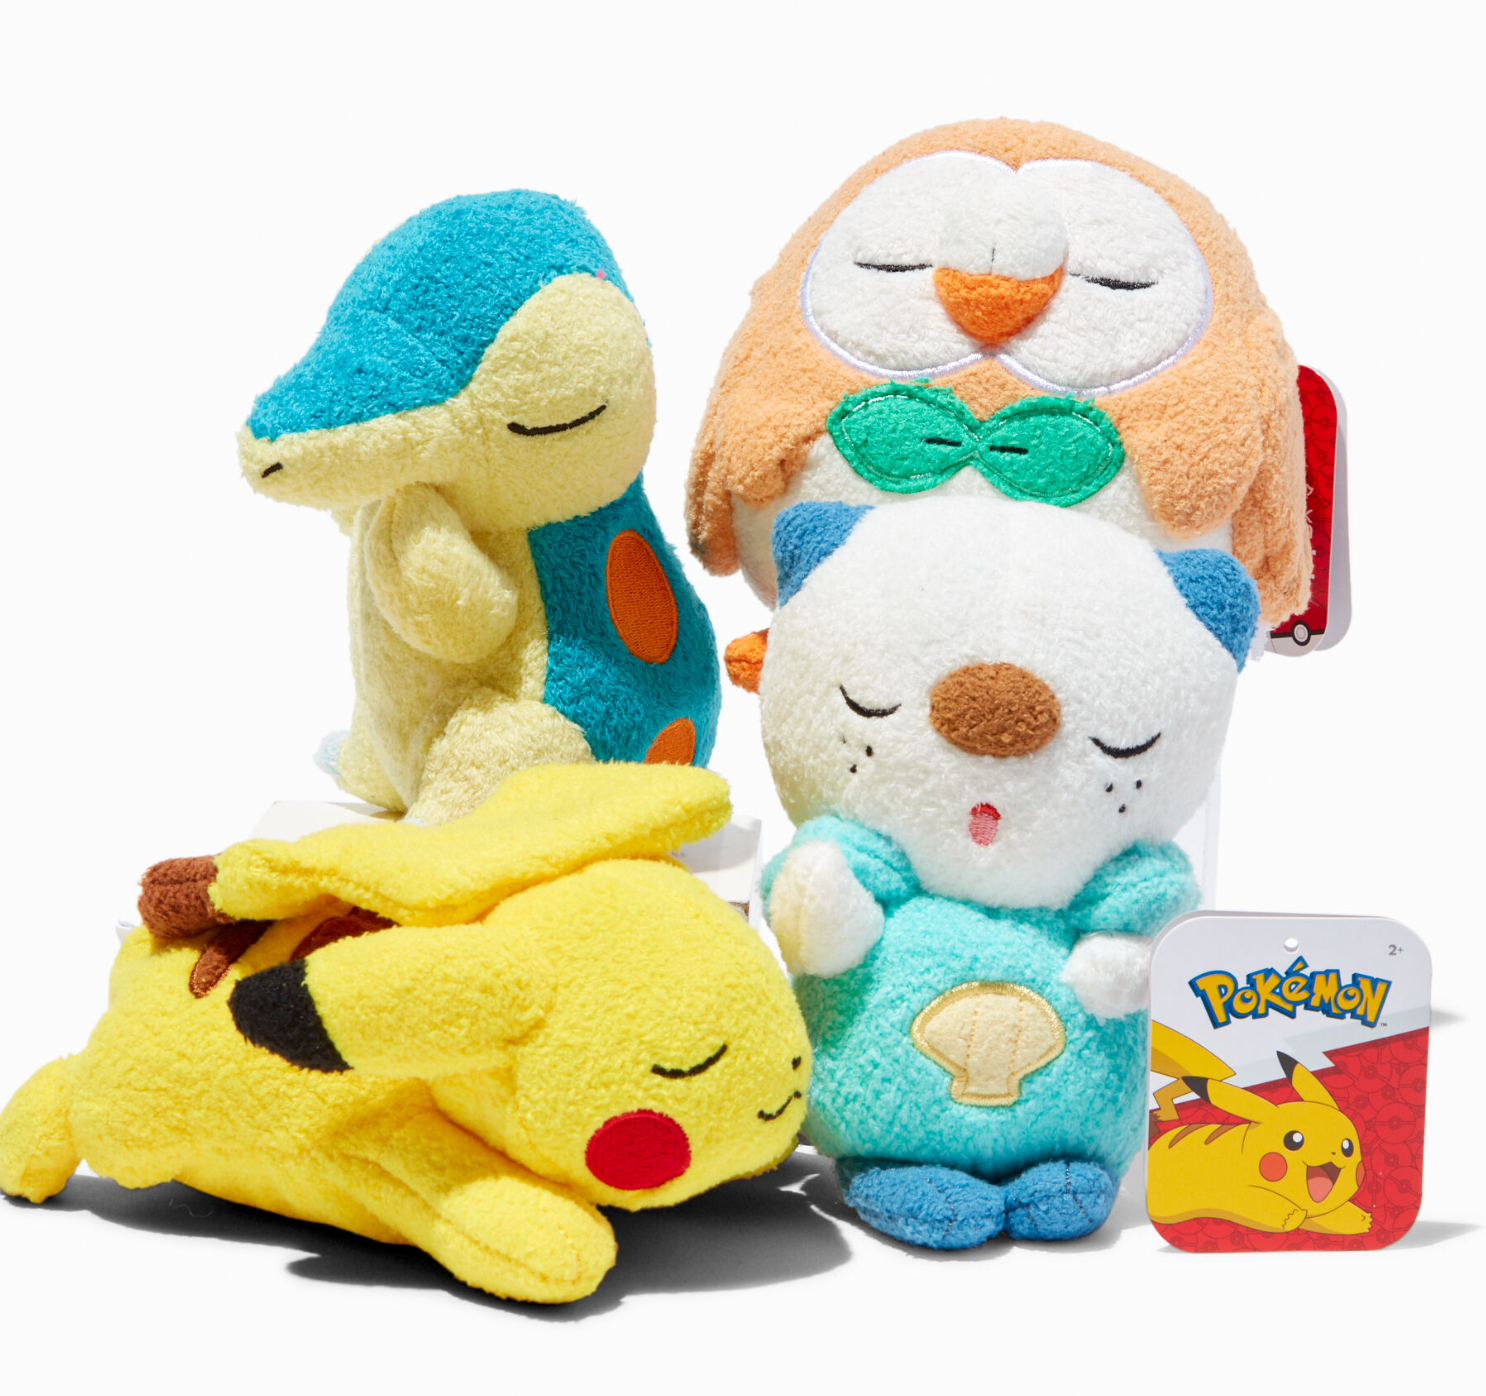 5-Inch Sleeping Pokemon Plush-Assorted -1 per order